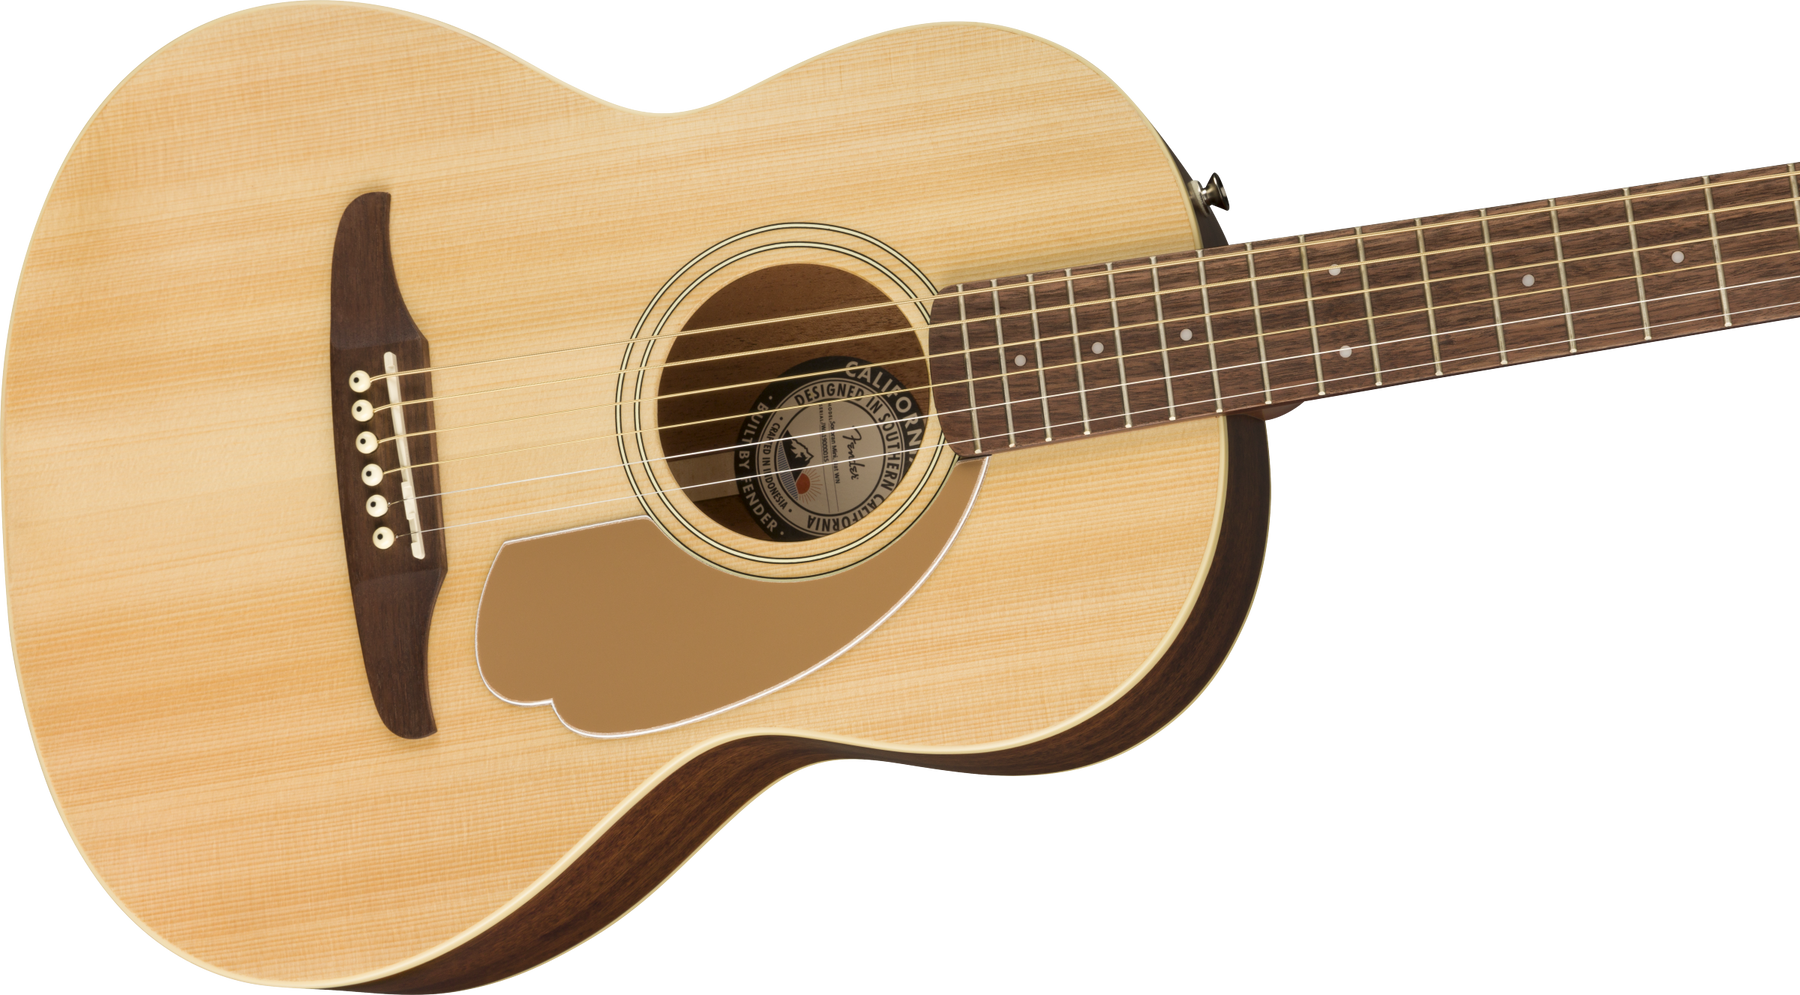 Fender Sonoran Mini Acoustic Guitar with Gig Bag - Natural